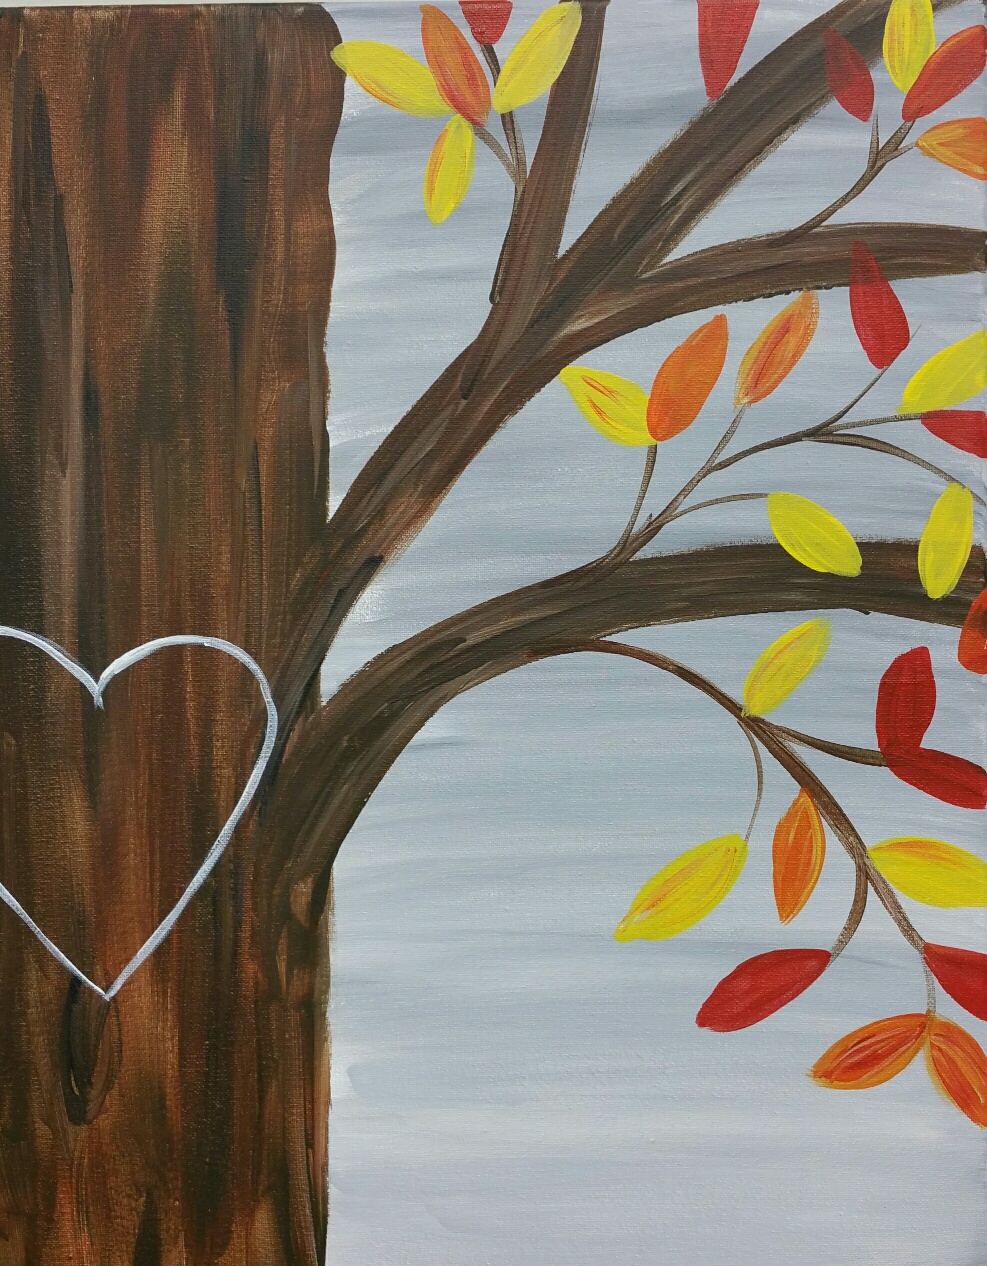 Fall "Couples" tree (EC Studio)